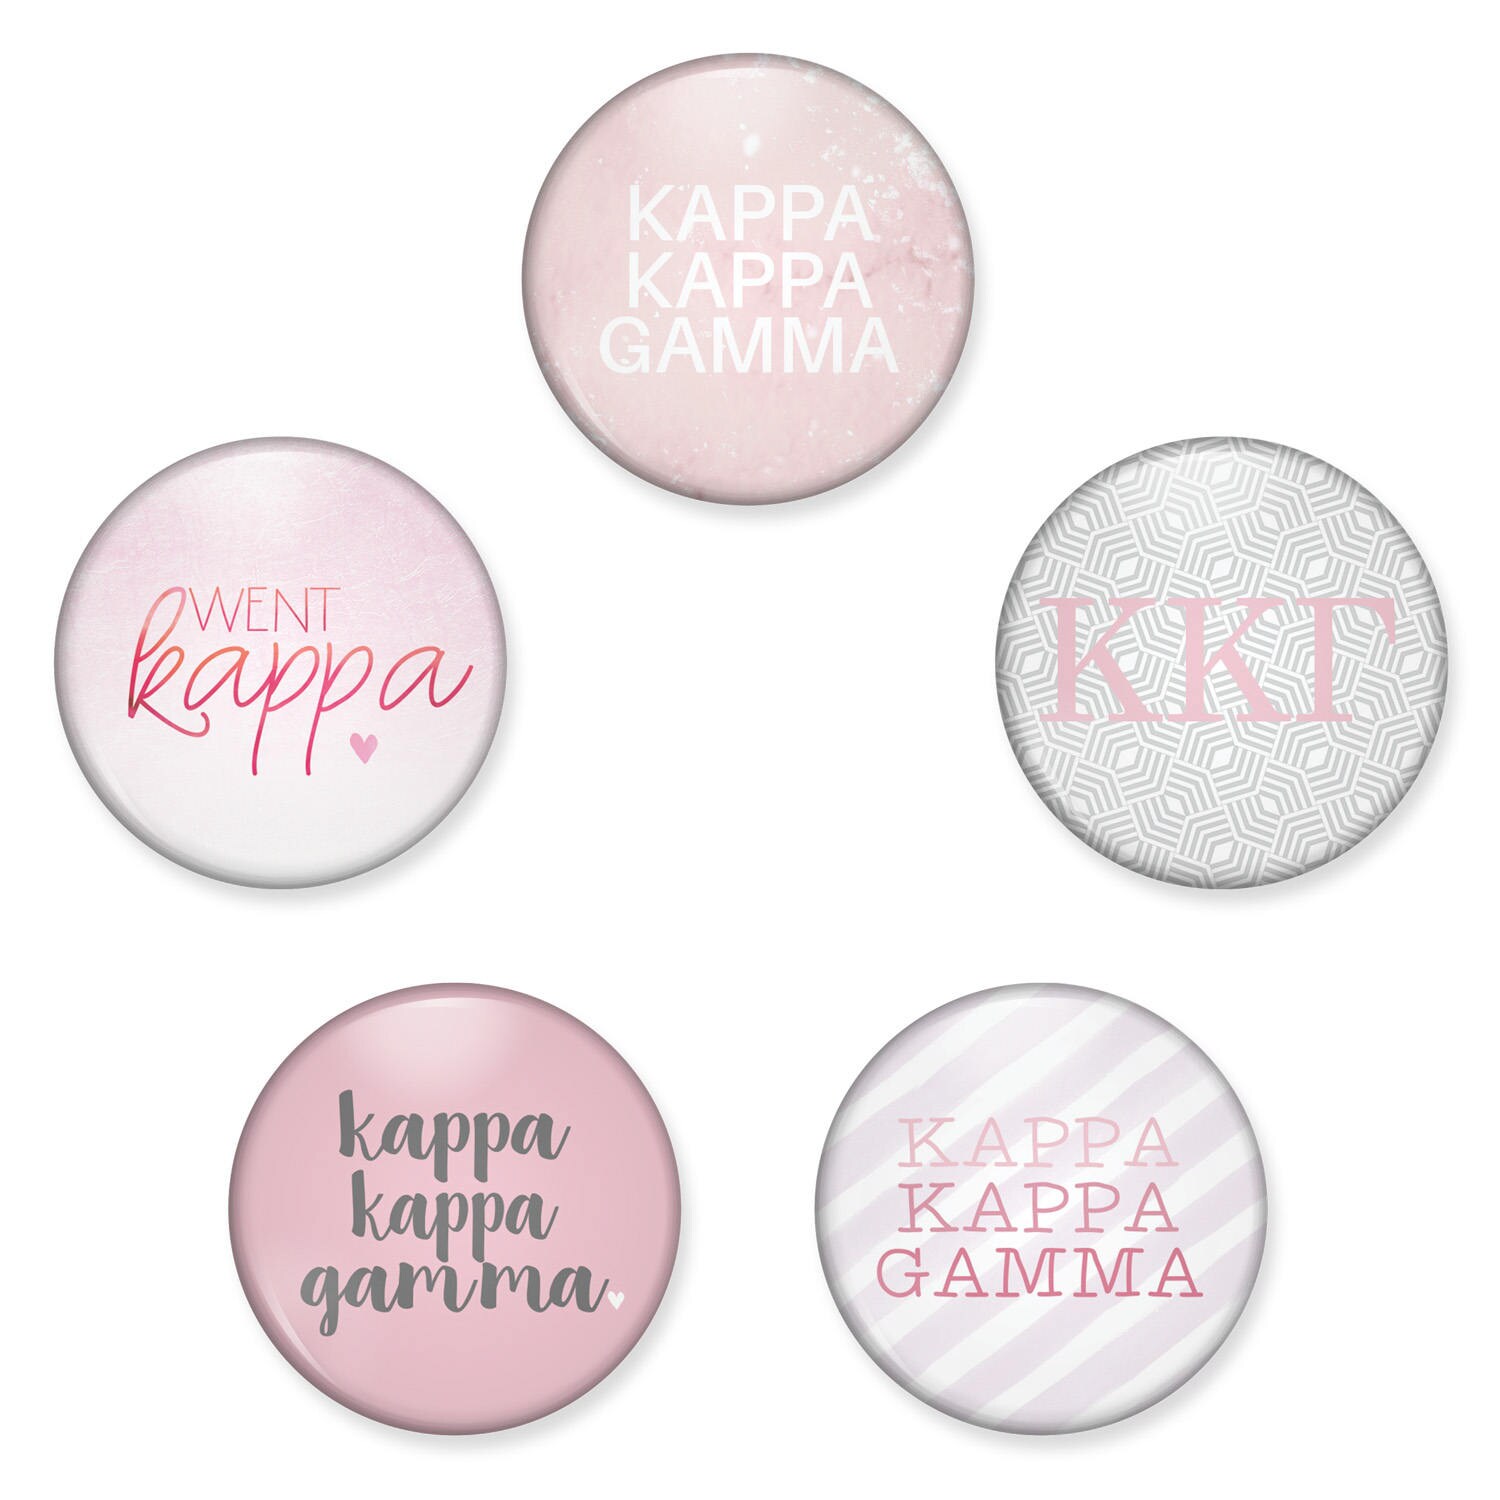 Kappa Gamma Button Set, Pin Back Buttons, Kkg Sorority Pack, Magnet Magnet, Bid Day Gifts